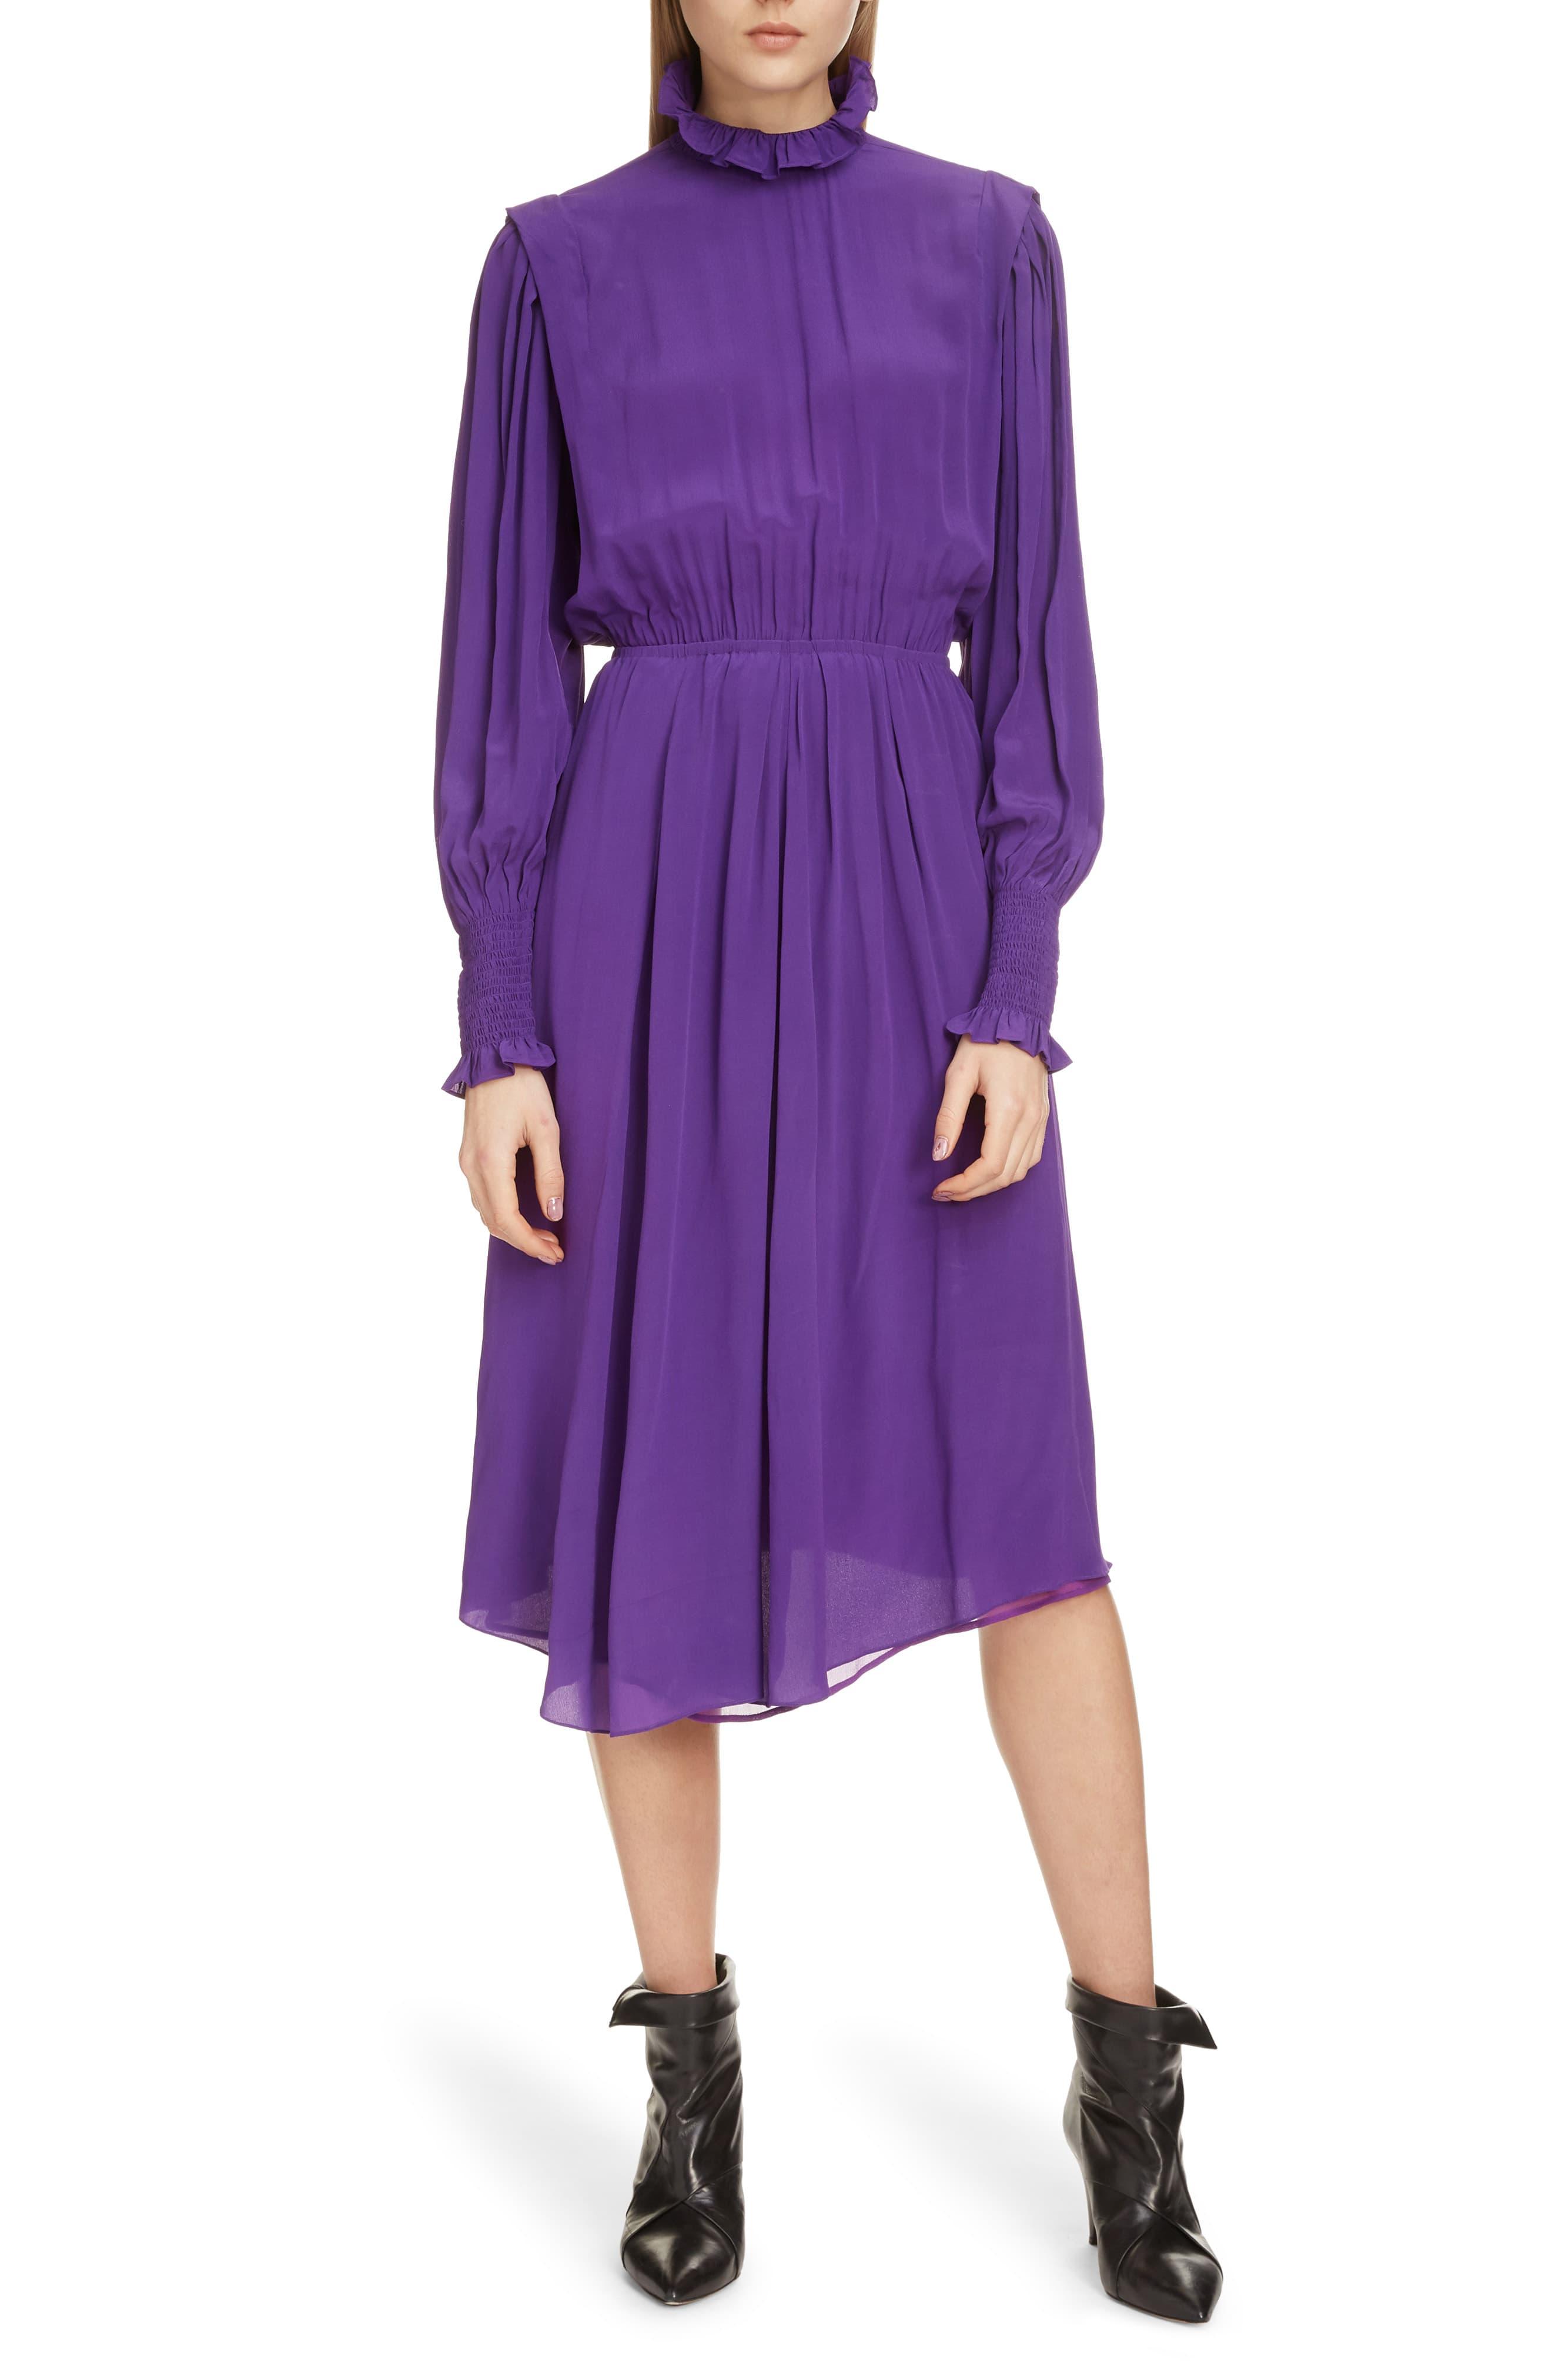 isabel marant purple dress